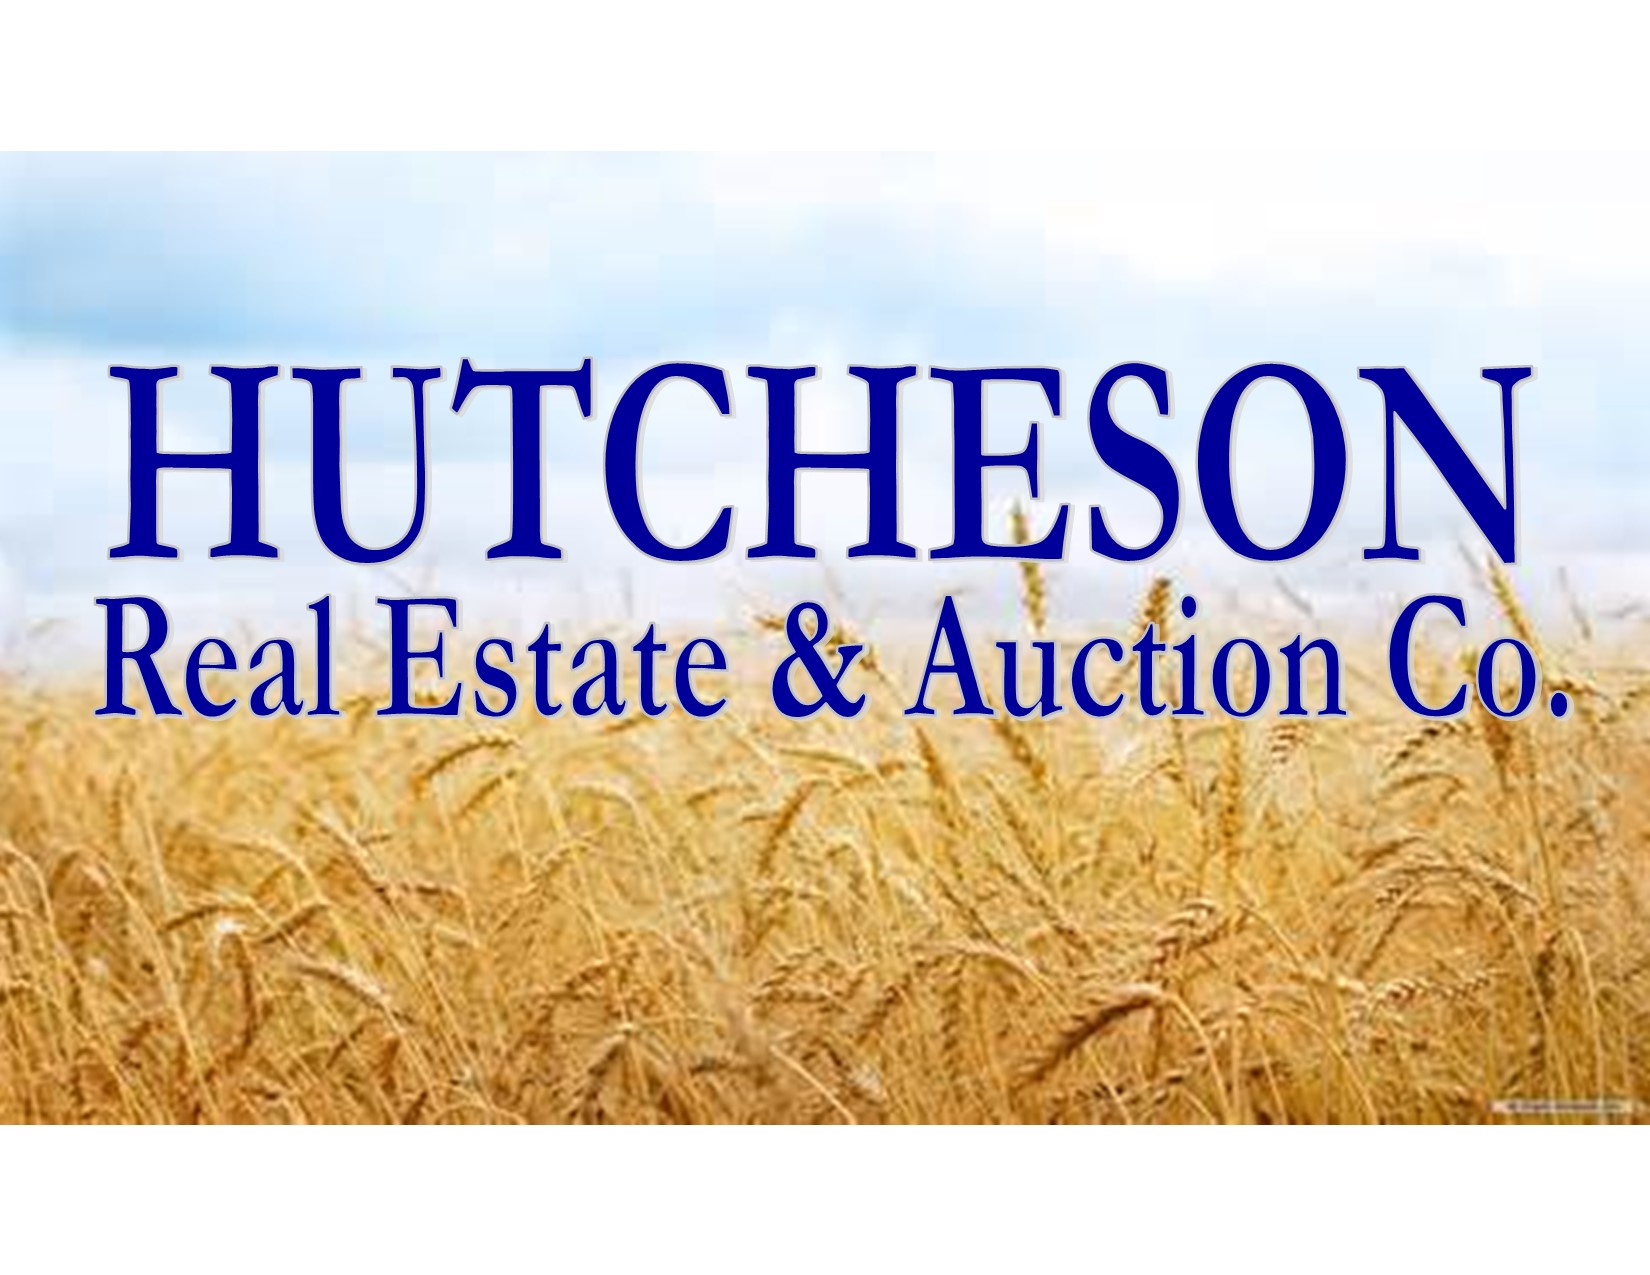 Hutcheson Real Estate & Auction Company 400 E Santa Fe, Trail Blvd, Lakin Kansas 67860